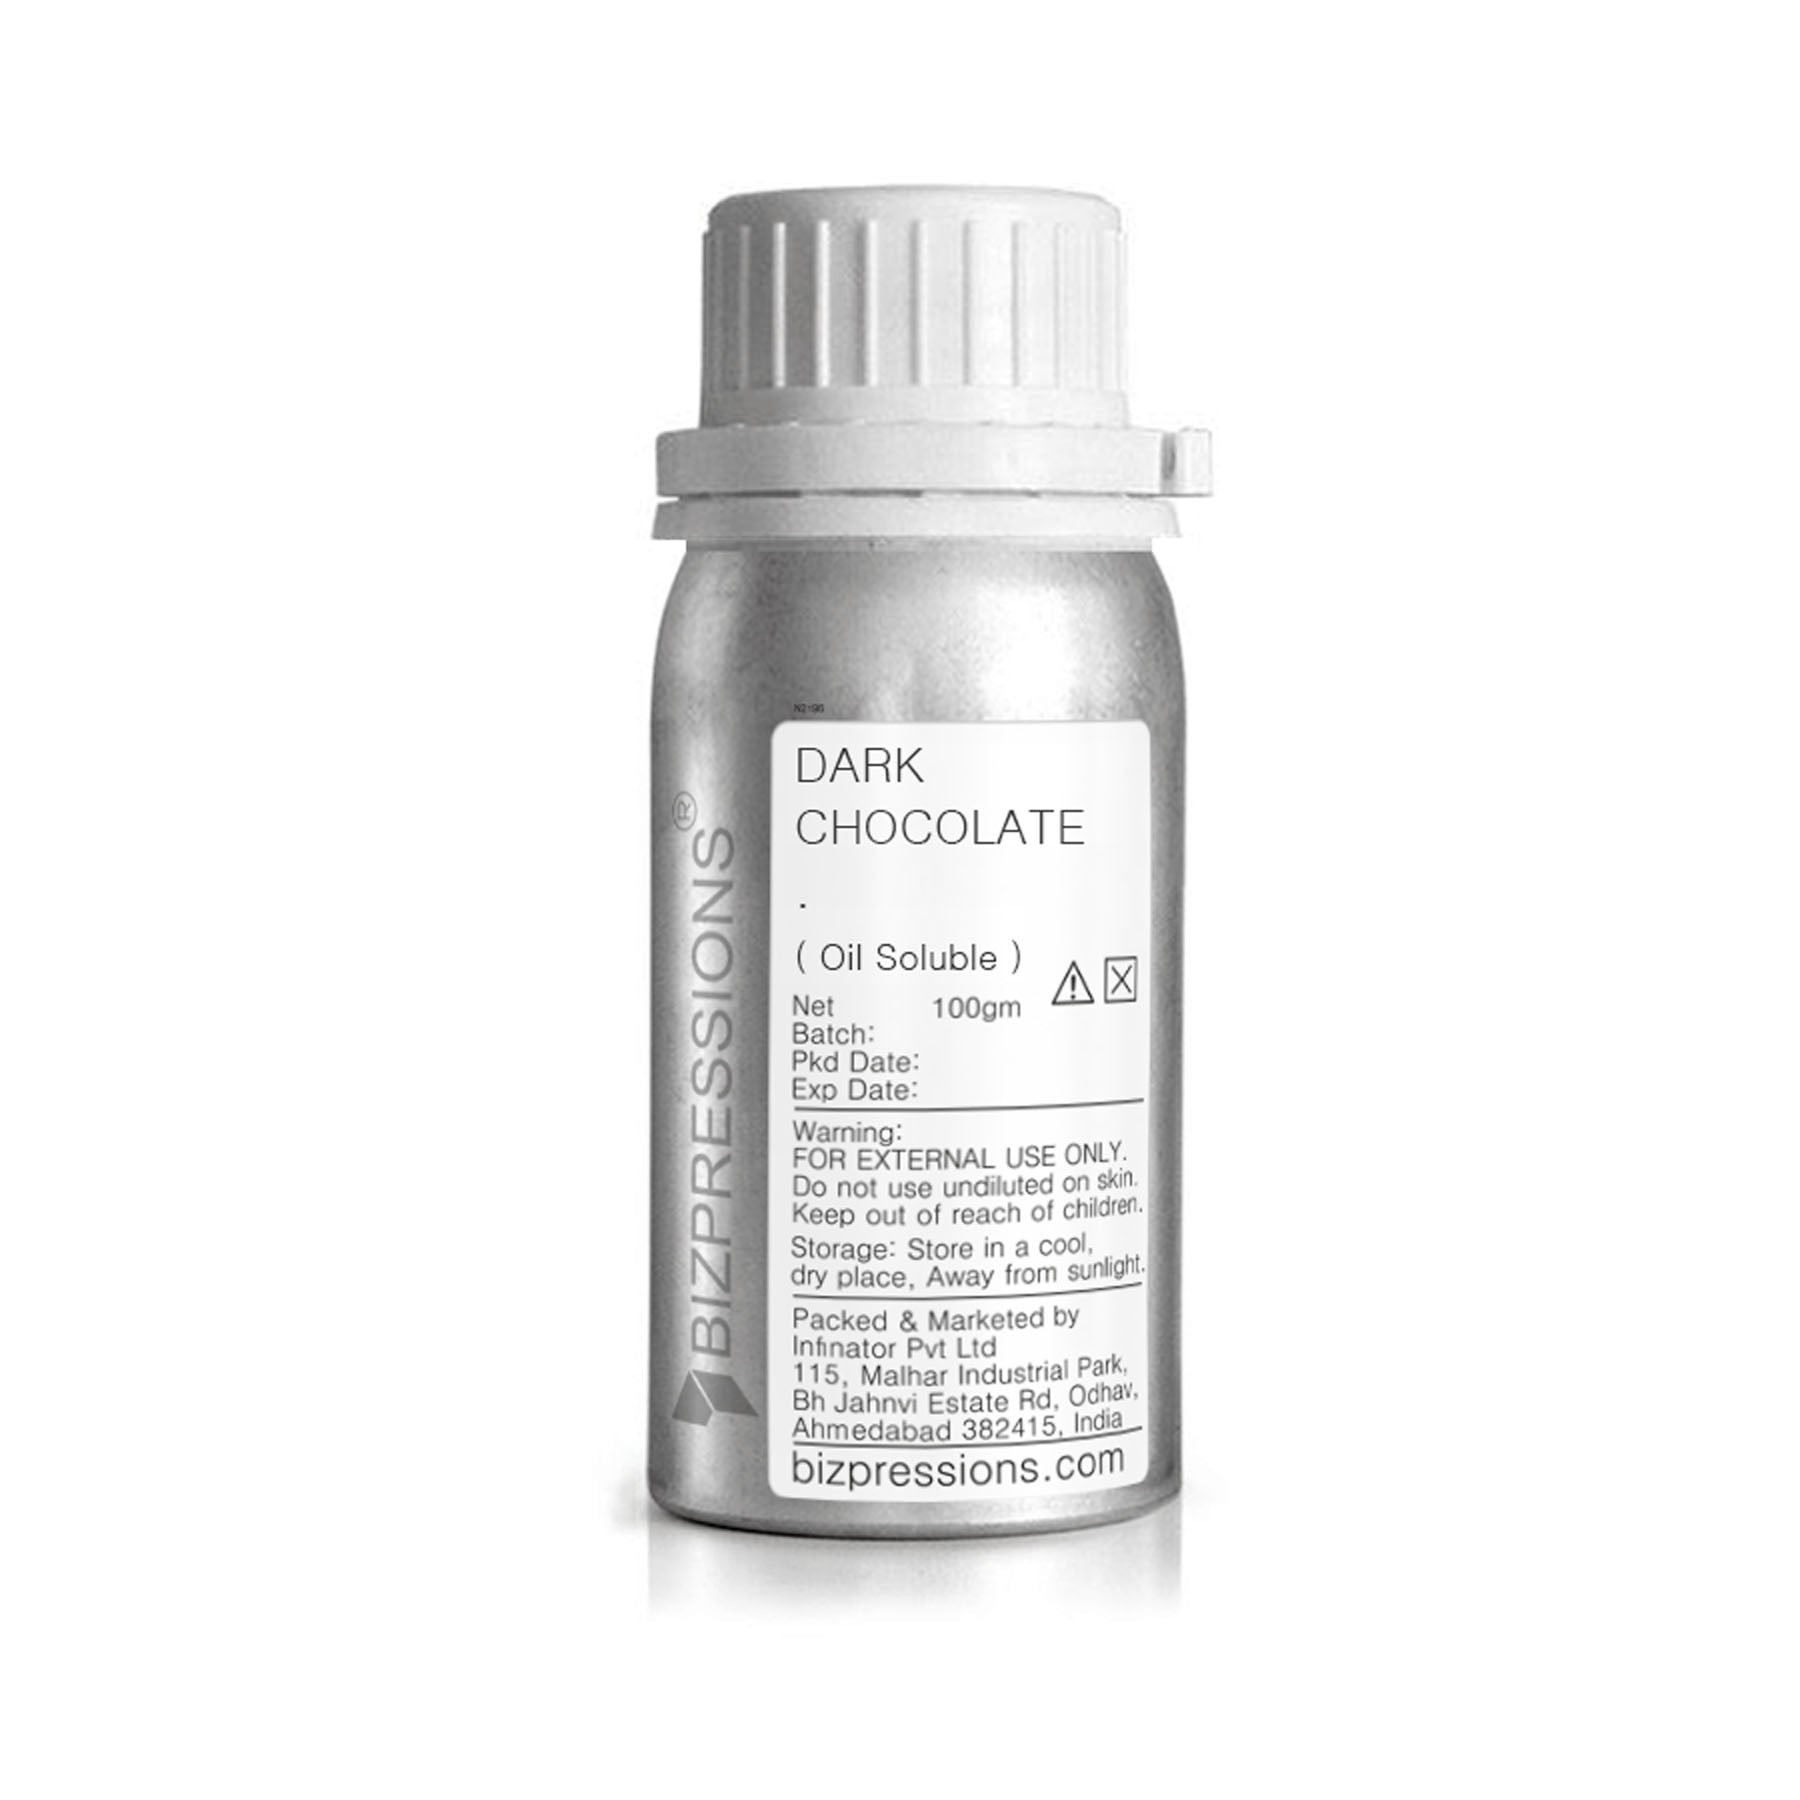 DARK CHOCOLATE - Fragrance ( Oil Soluble ) - 100 gm